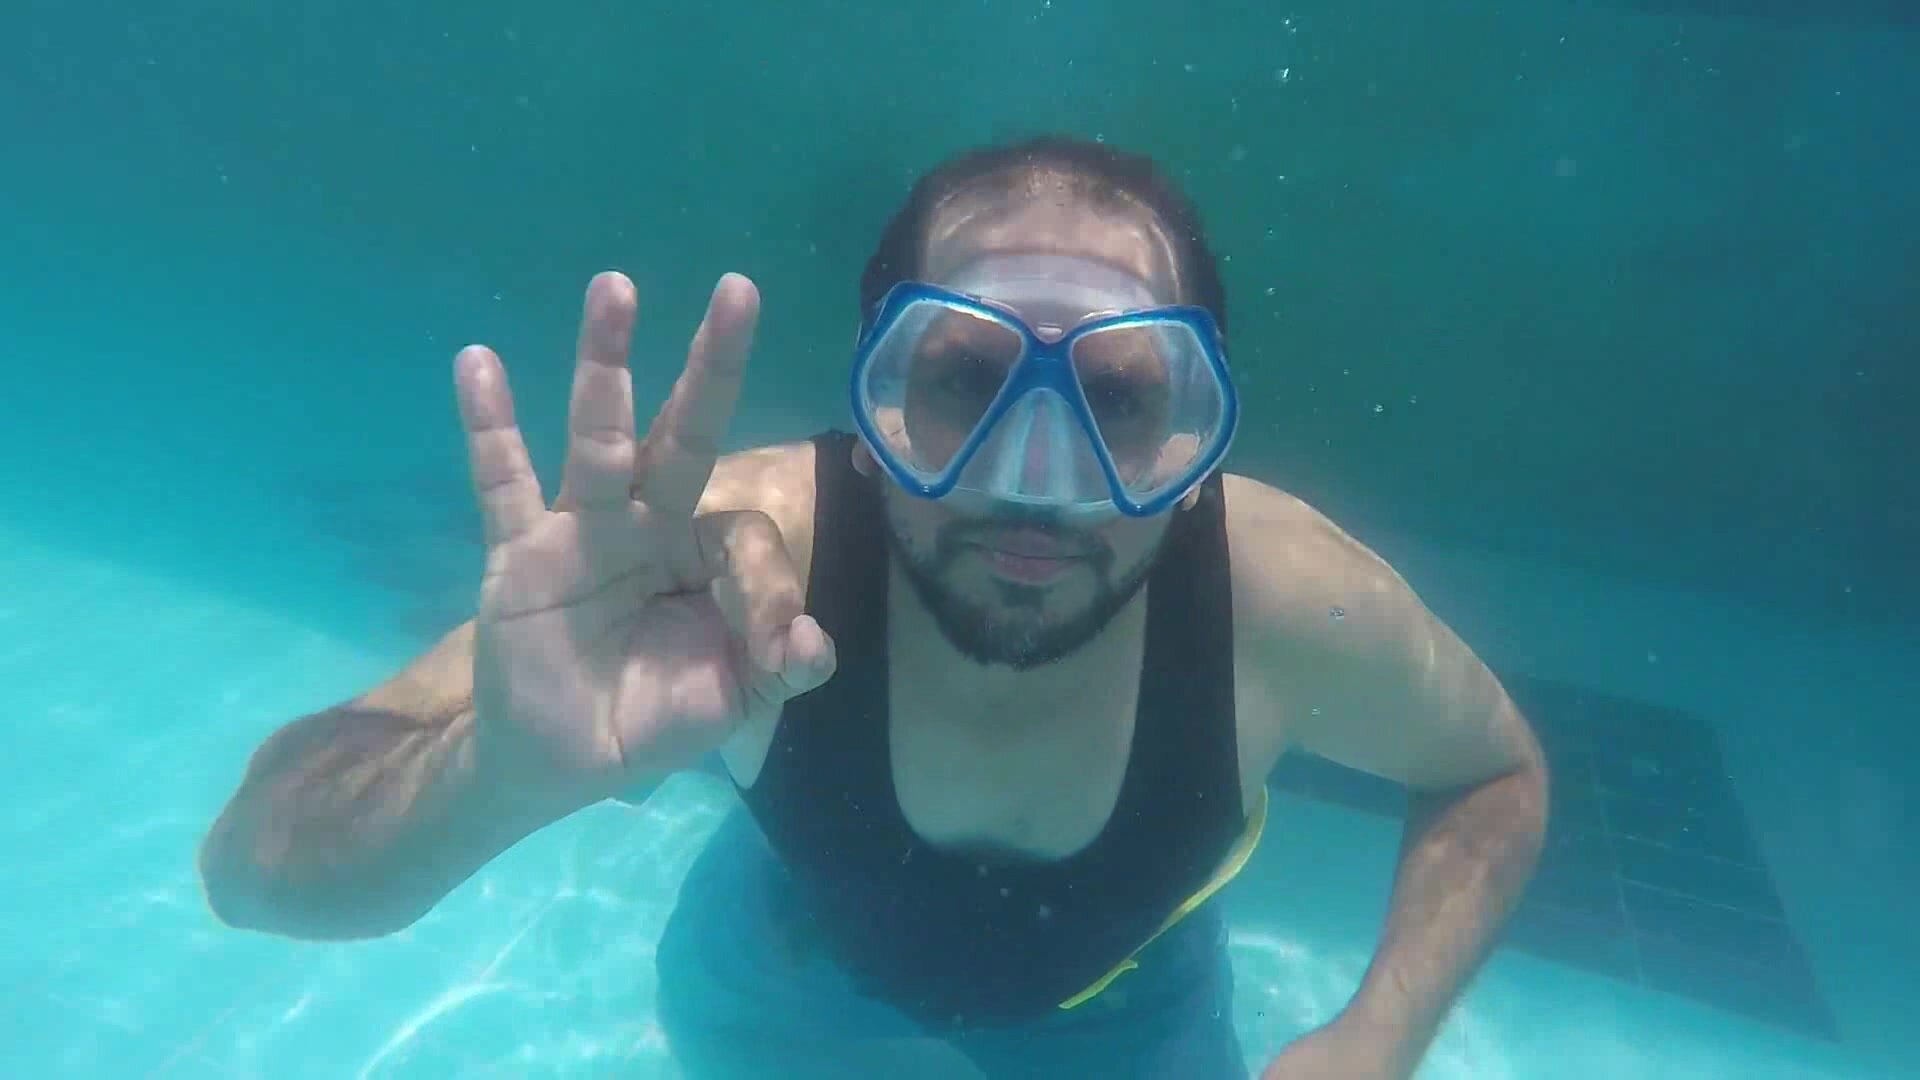 Arab freediver masking underwater